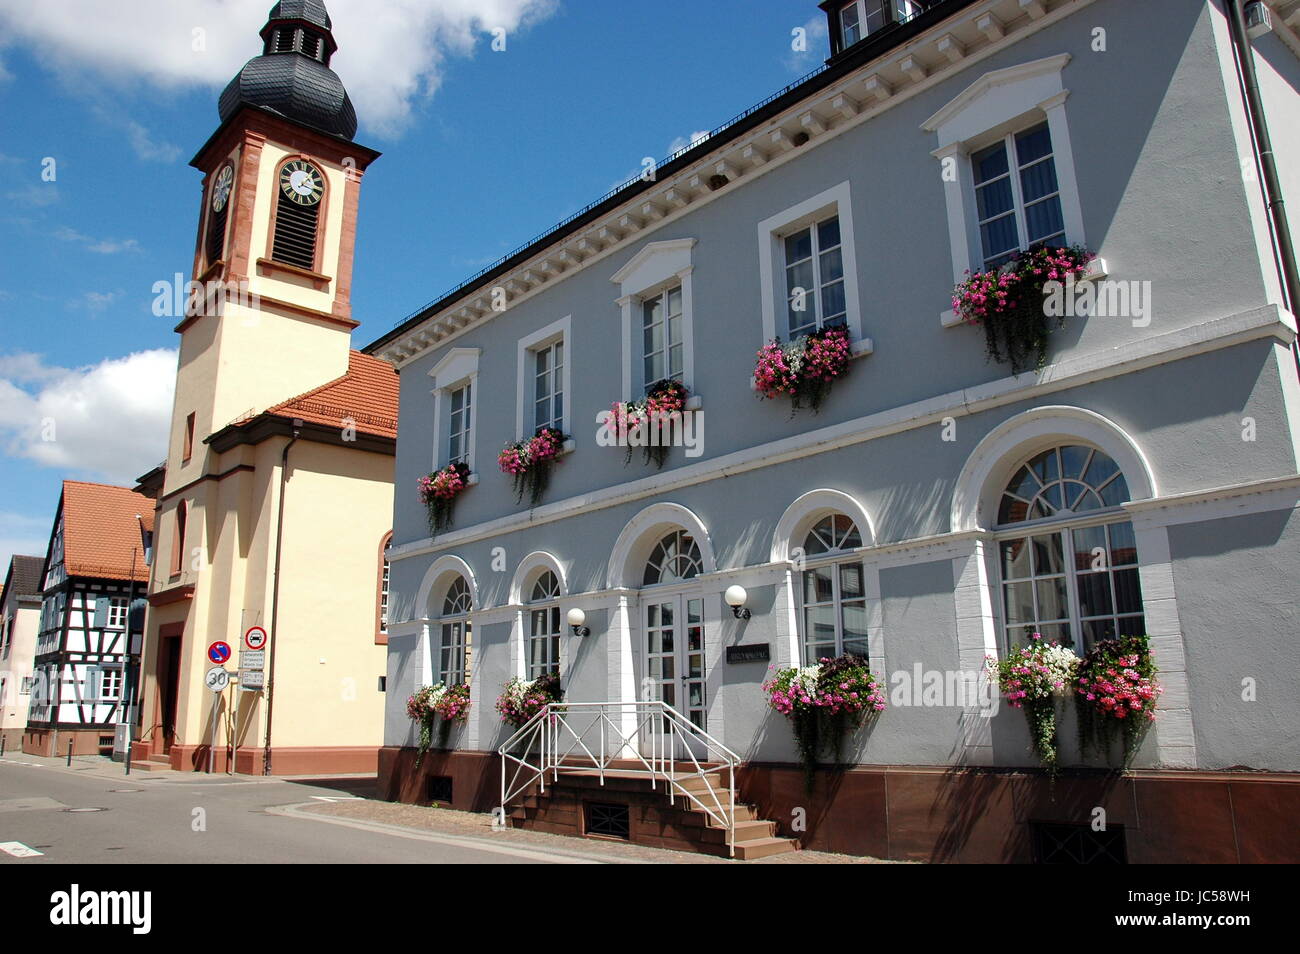 christ church and old town hall in wörth am rhein Stock Photo